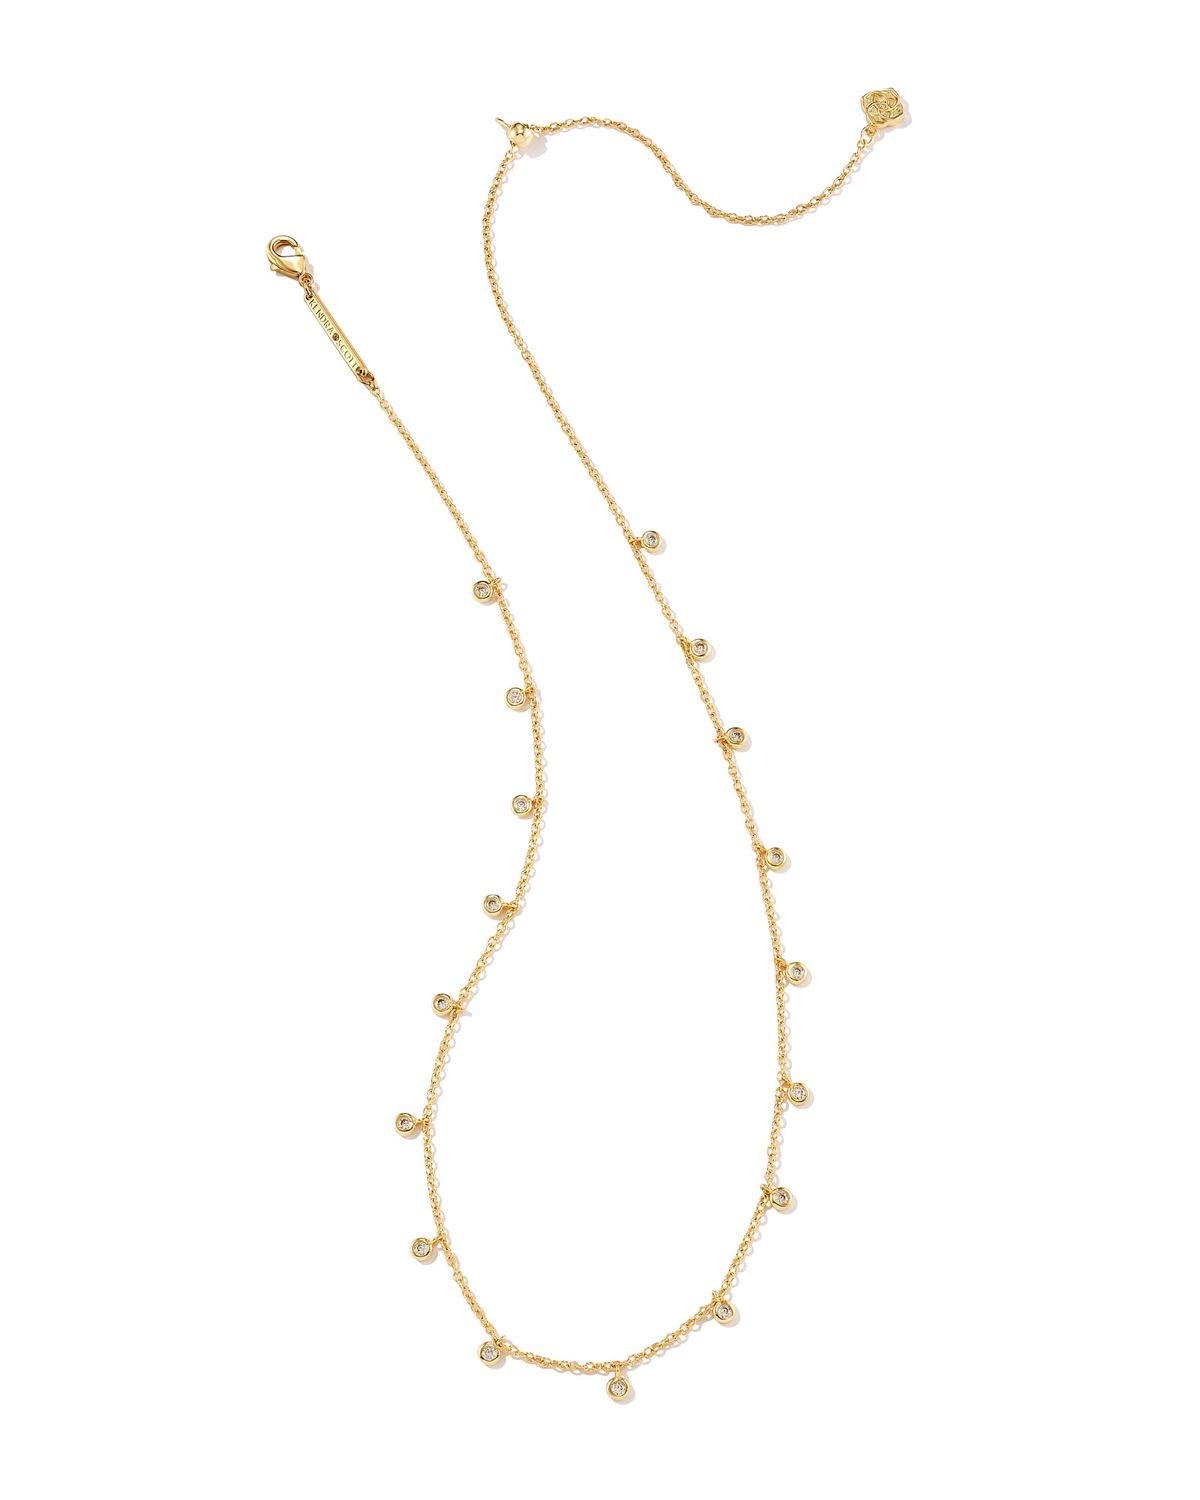 Kendra Scott Ameila Chain Necklace, Fashion Jewelry for Women